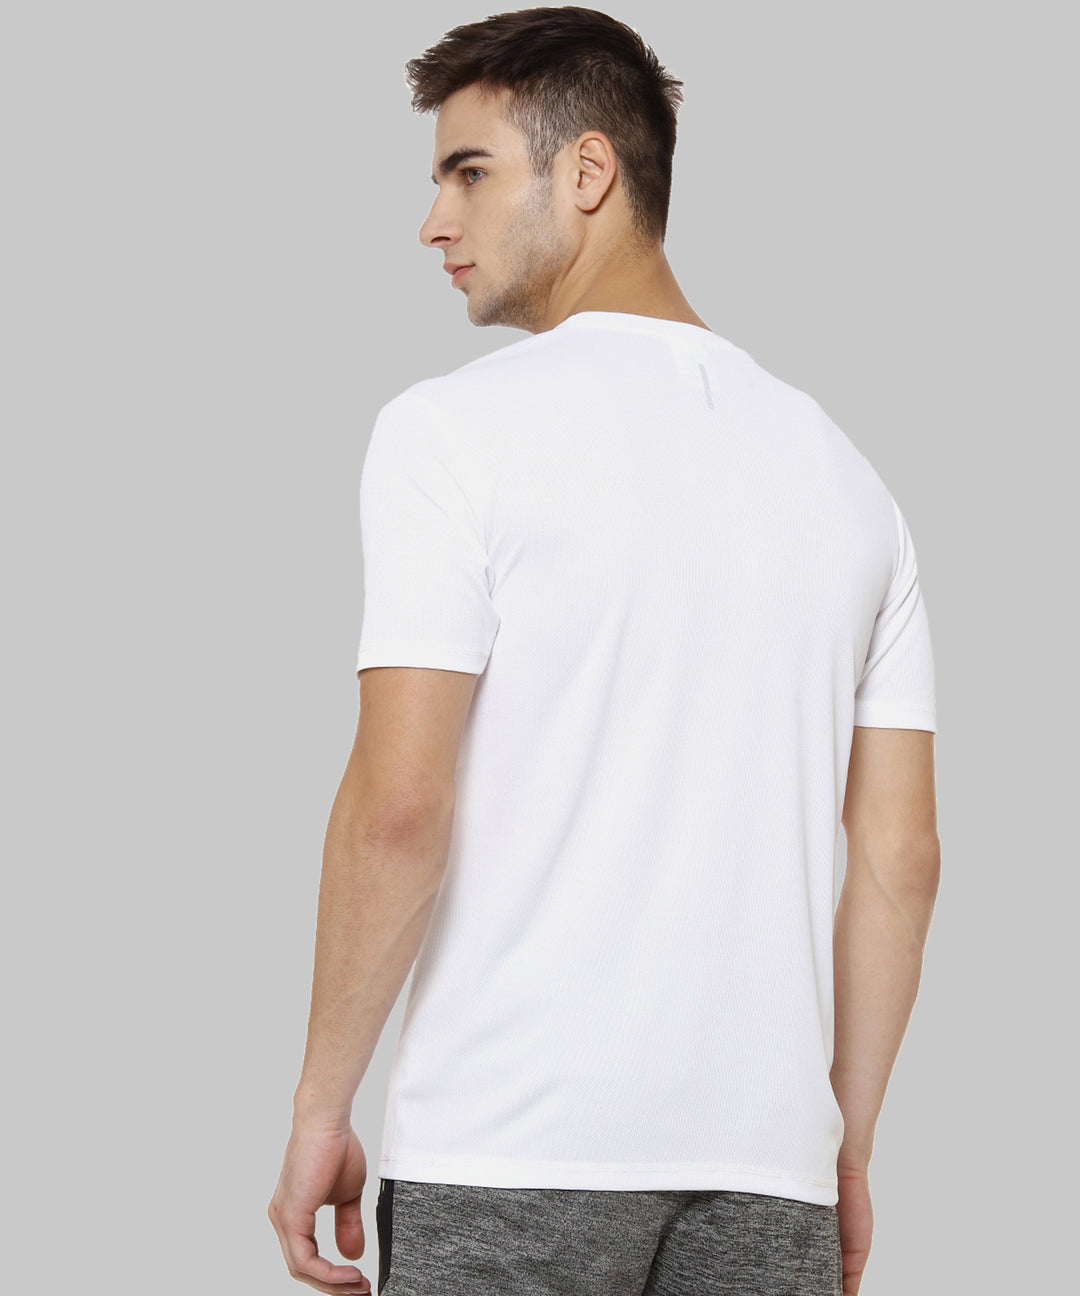 White Men Solid Polyester Sports Tshirt Round Neck